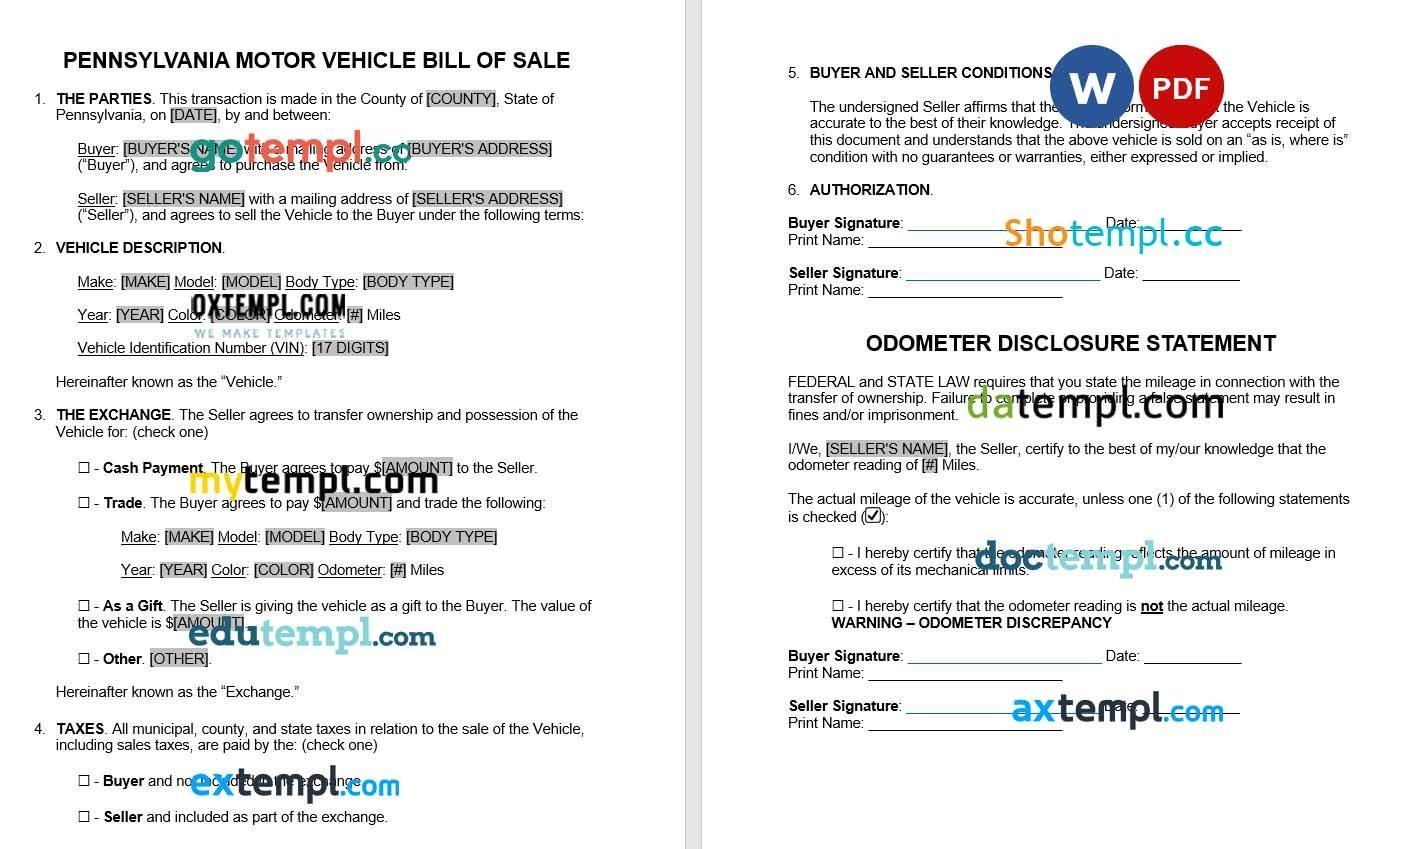 Pennsylvania Motor Vehicle Bill of Sale example, fully editable